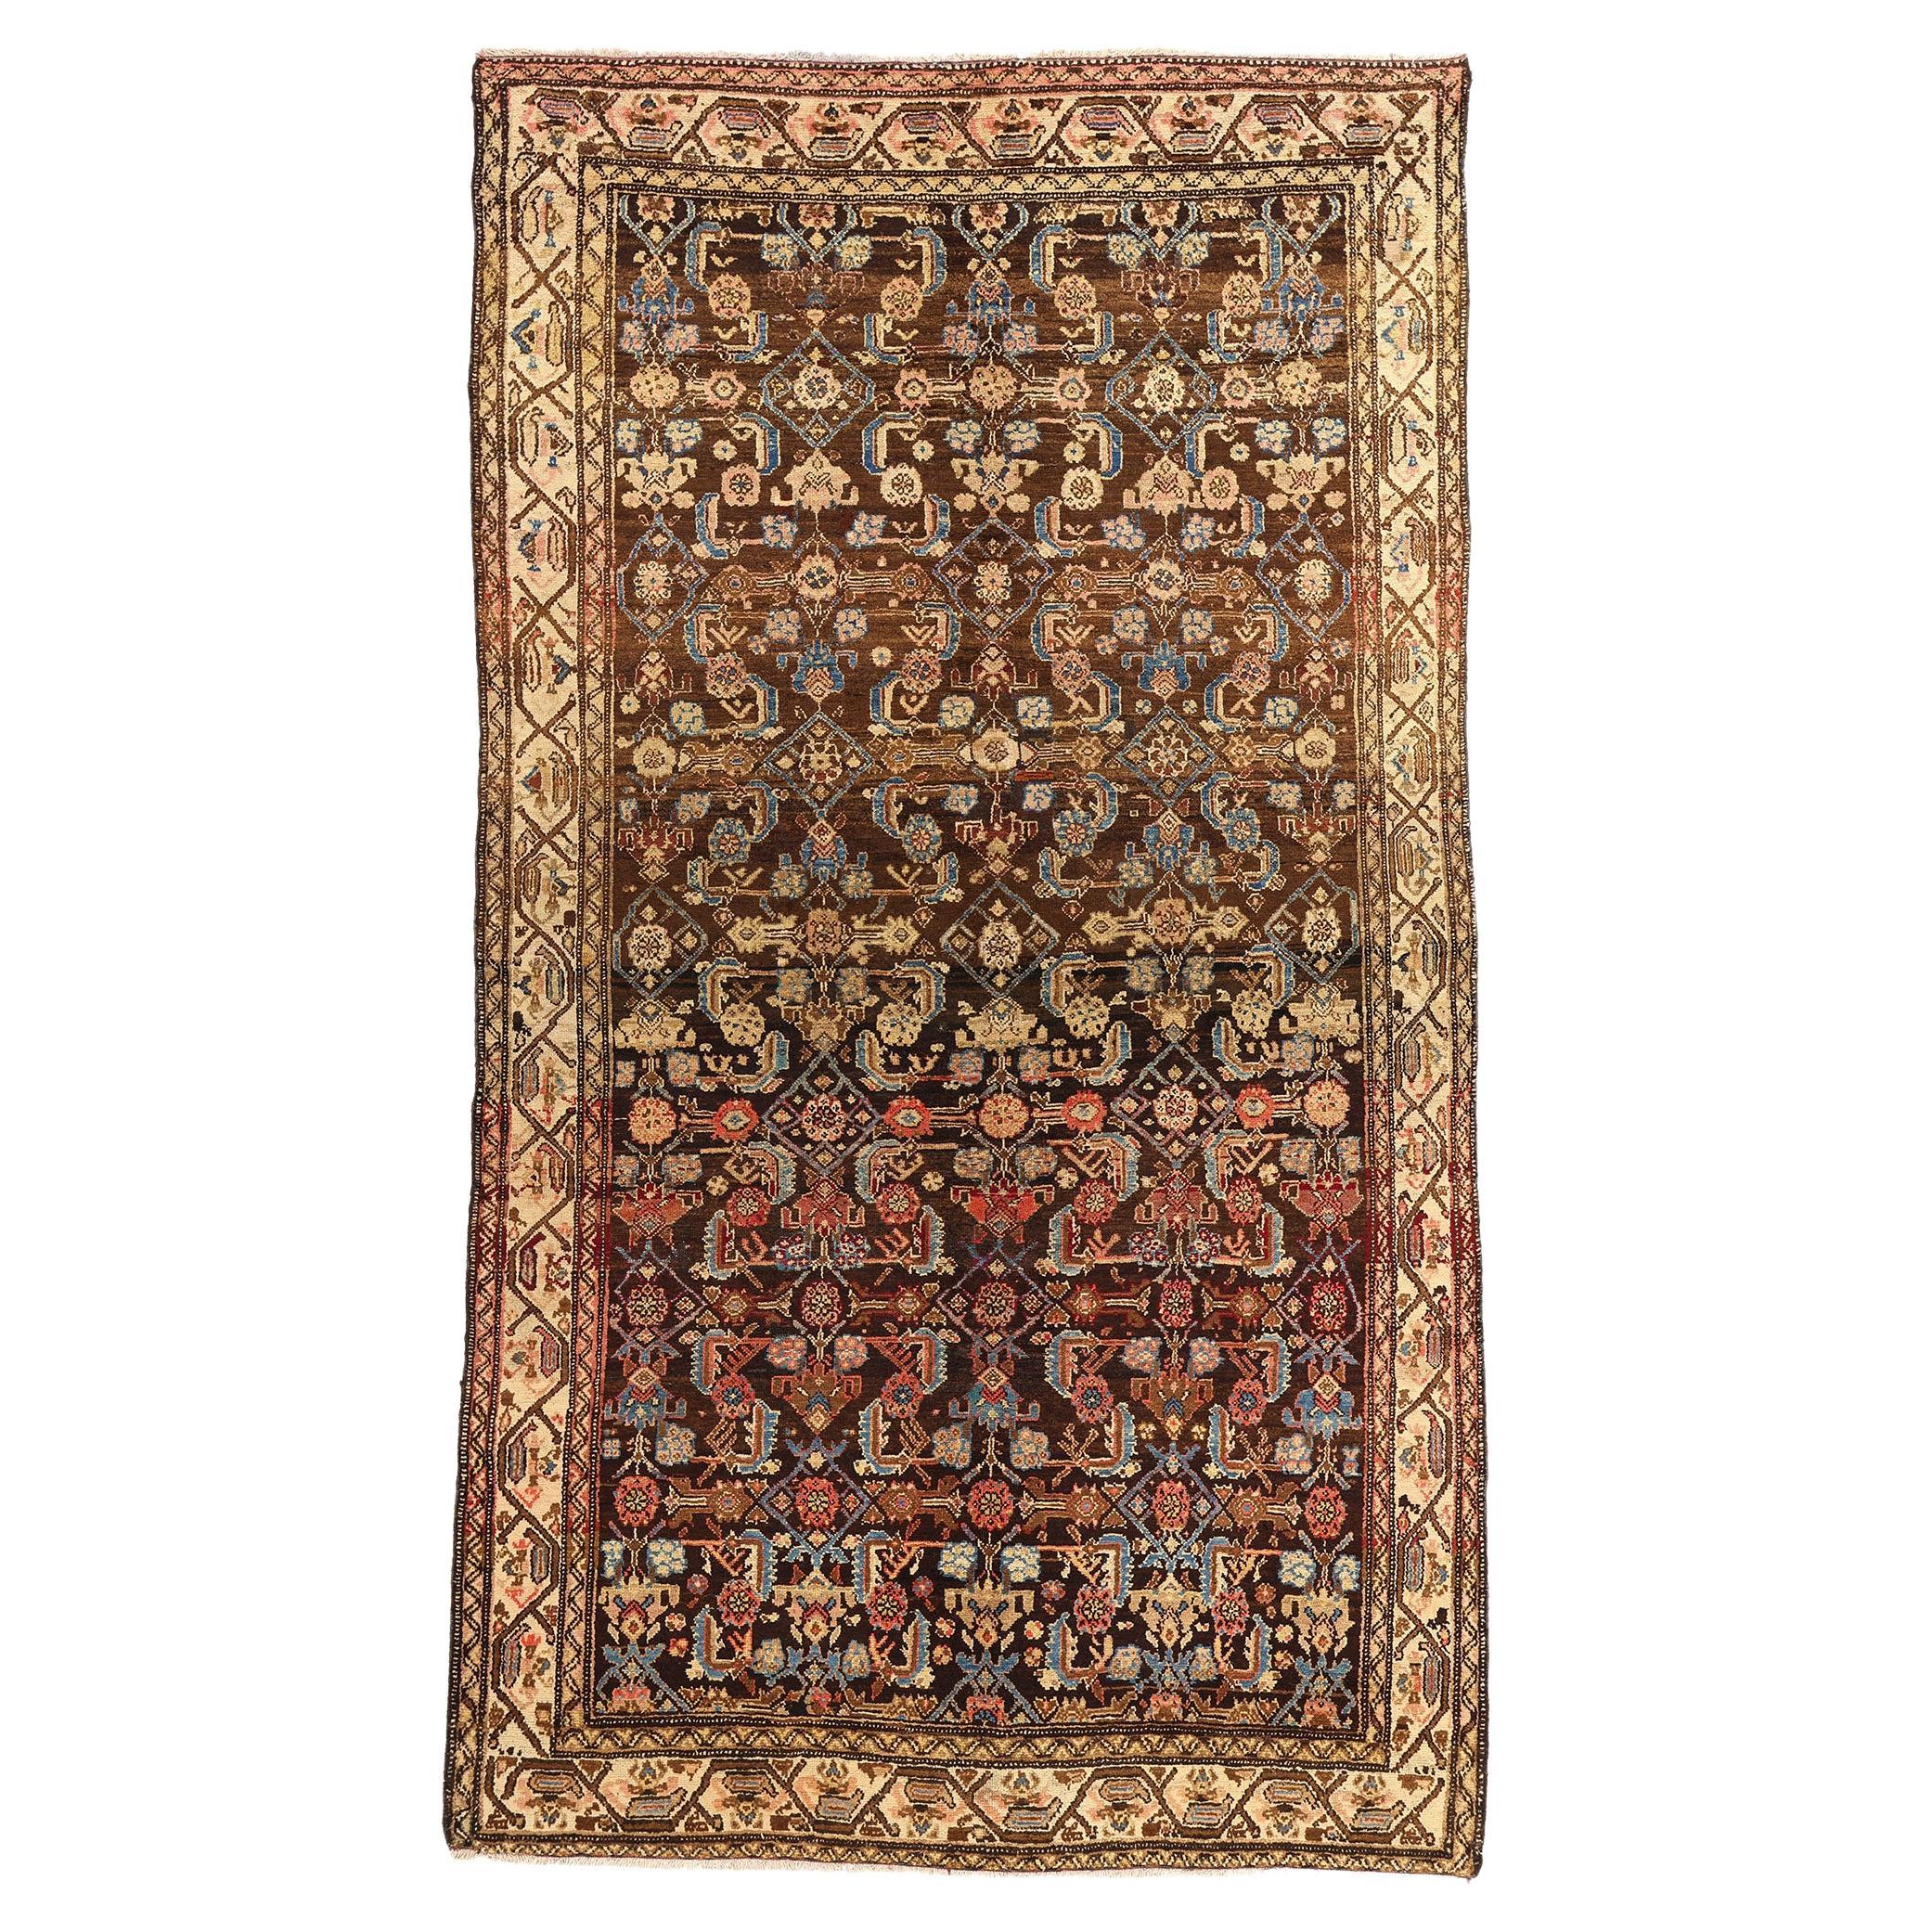 Antique Persian Malayer Rug, 05'01 x 09'02